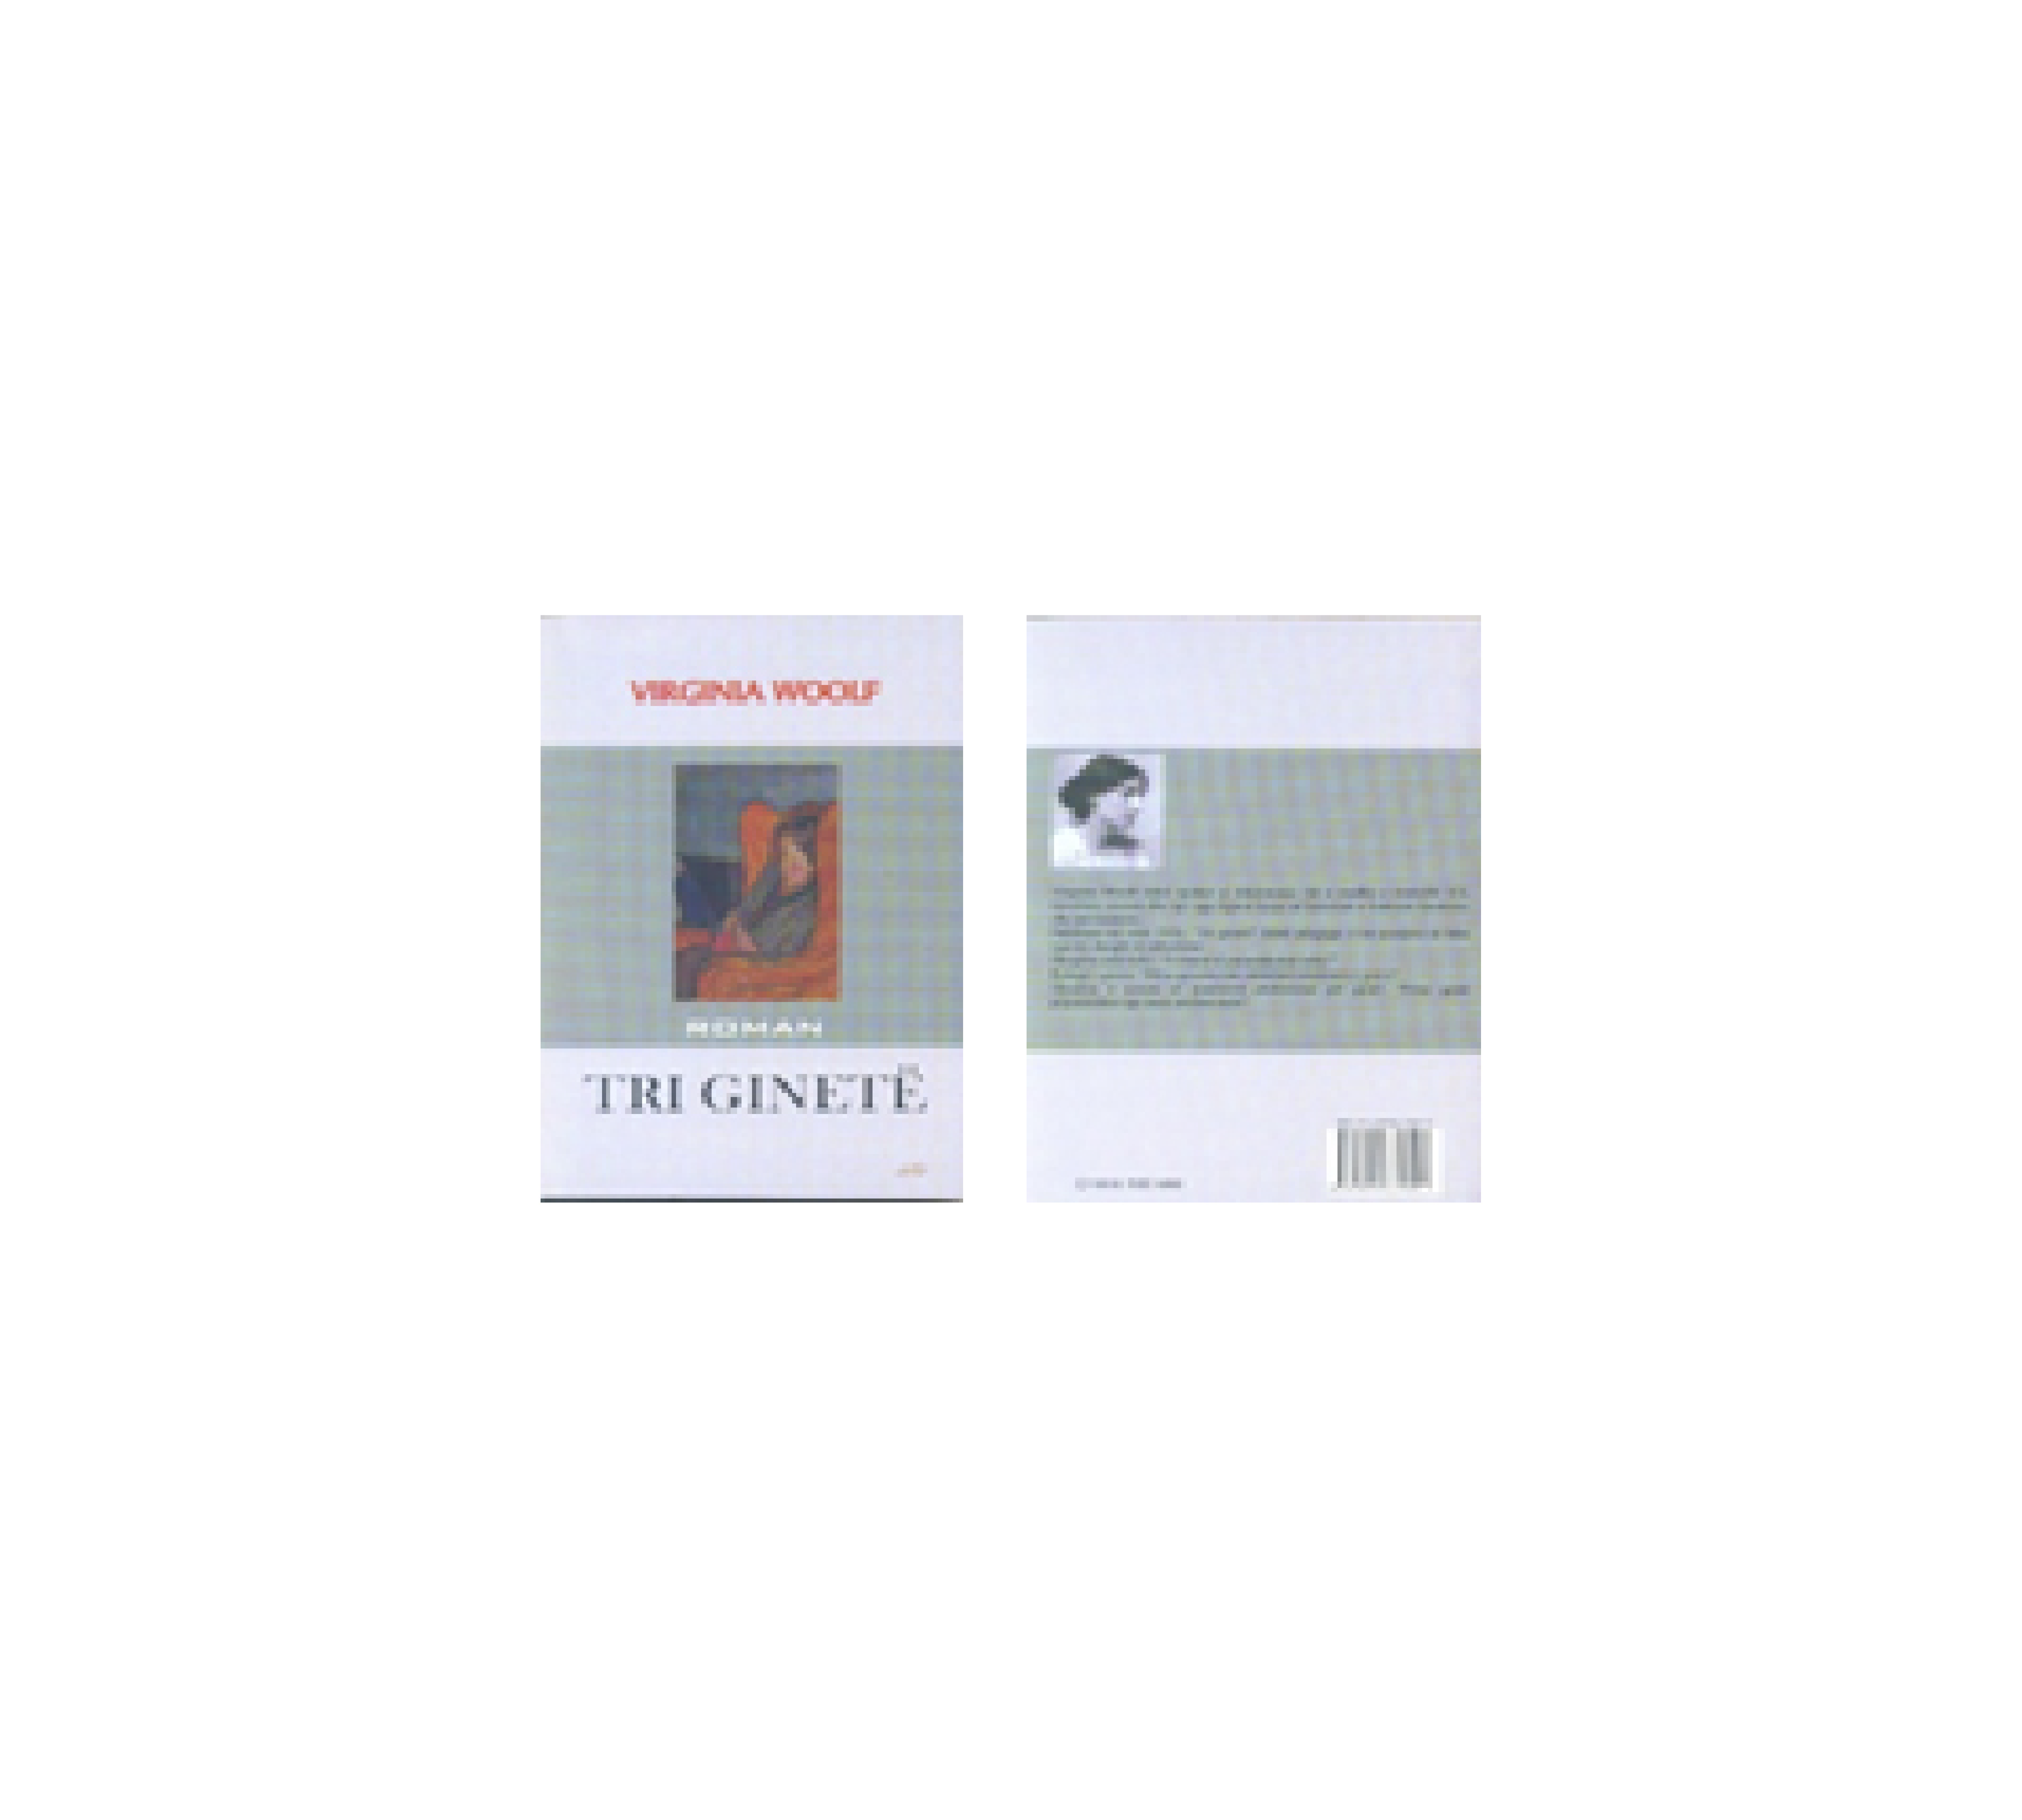 TRI GINETË (Three guineas) – Author: Virginia Wolf